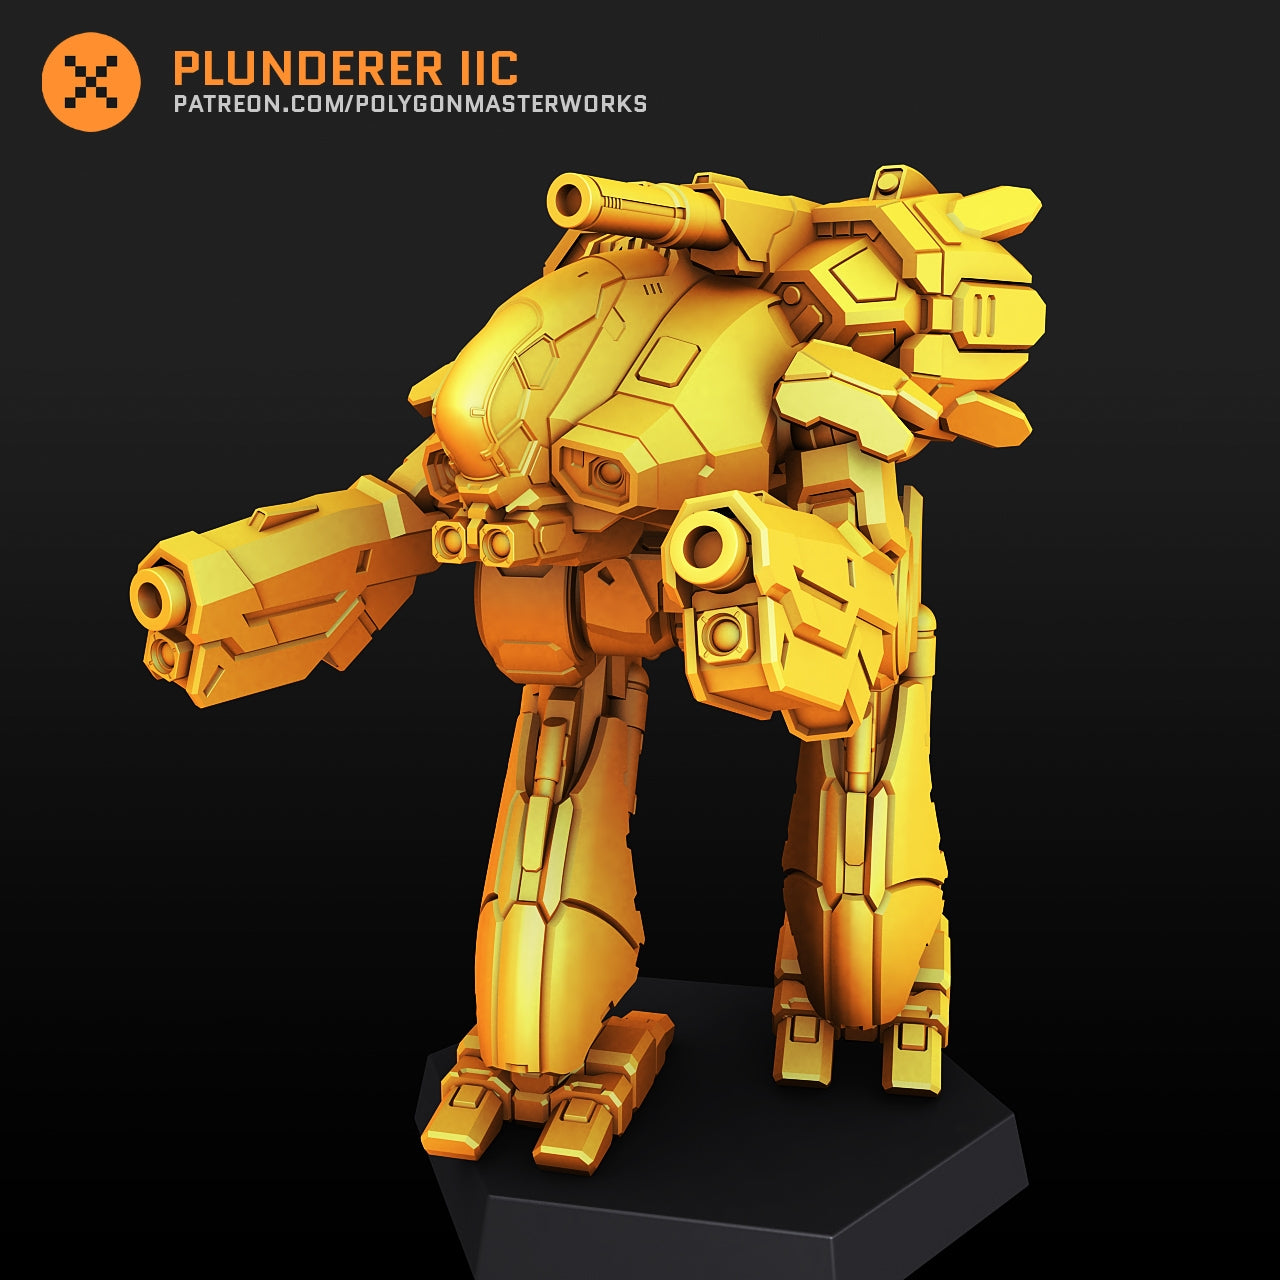 Plunderer IIC (By PMW) Alternate Battletech Mechwarrior Miniatures